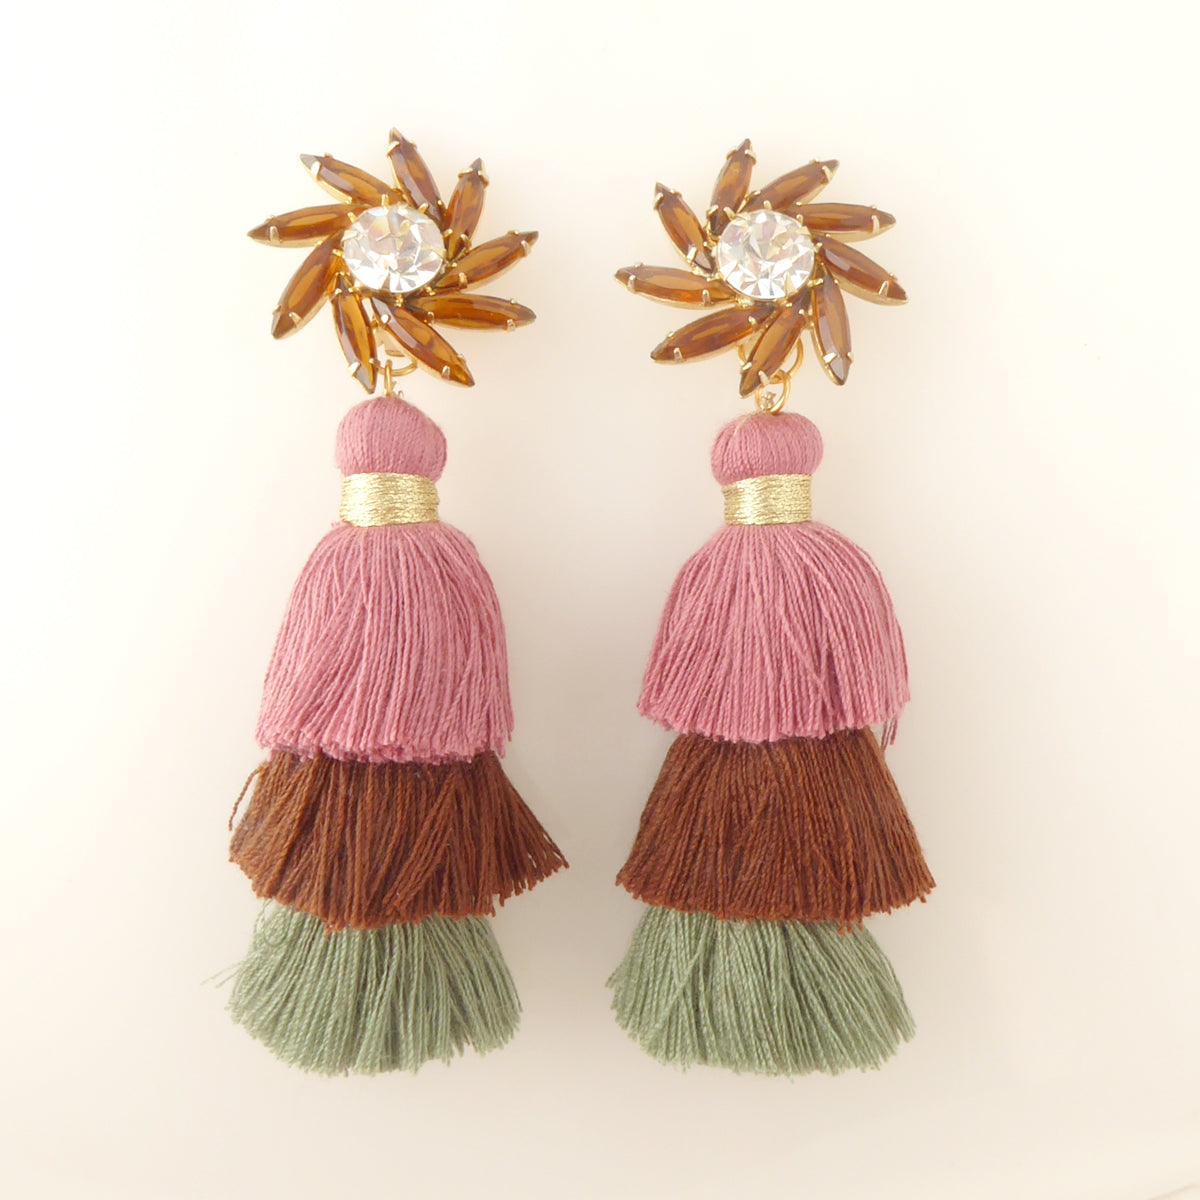 Autumn rhinestone tassel earrings by Jenny Dayco 1